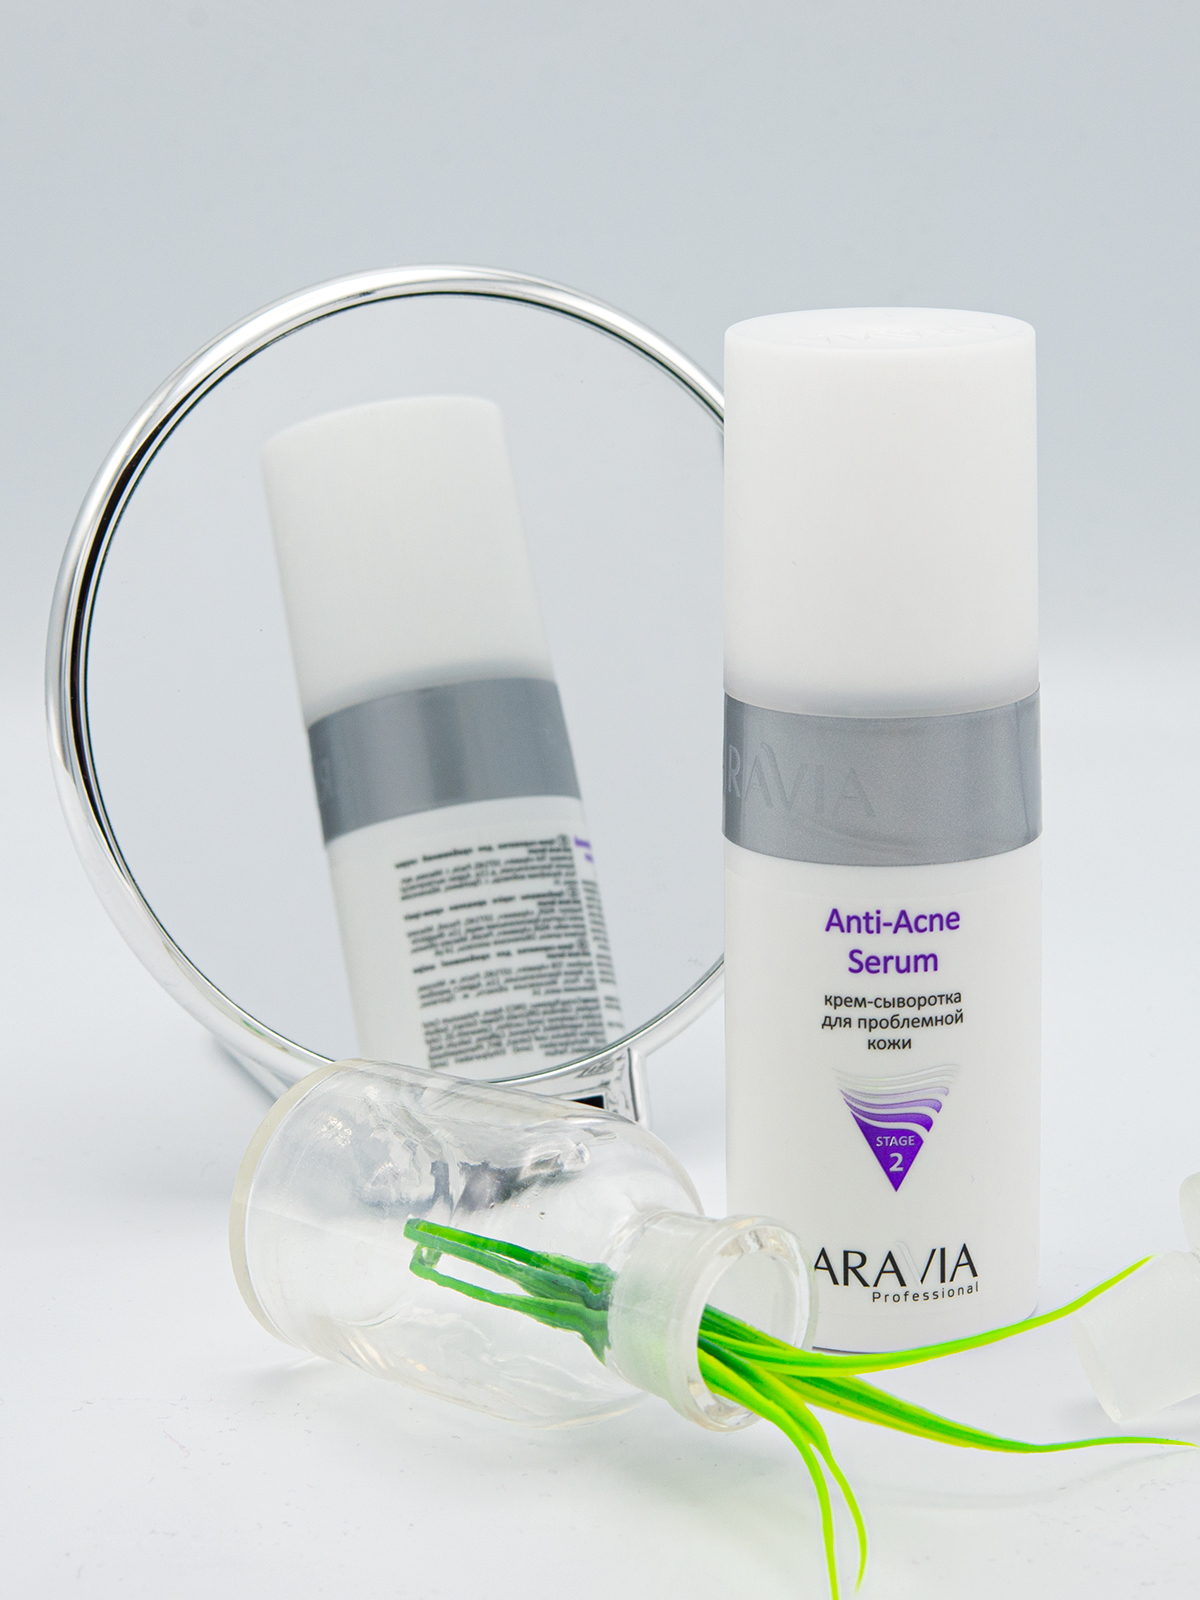 ARAVIA Professional Крем-сыворотка для проблемной кожи Anti-Acne Serum, 150 мл.